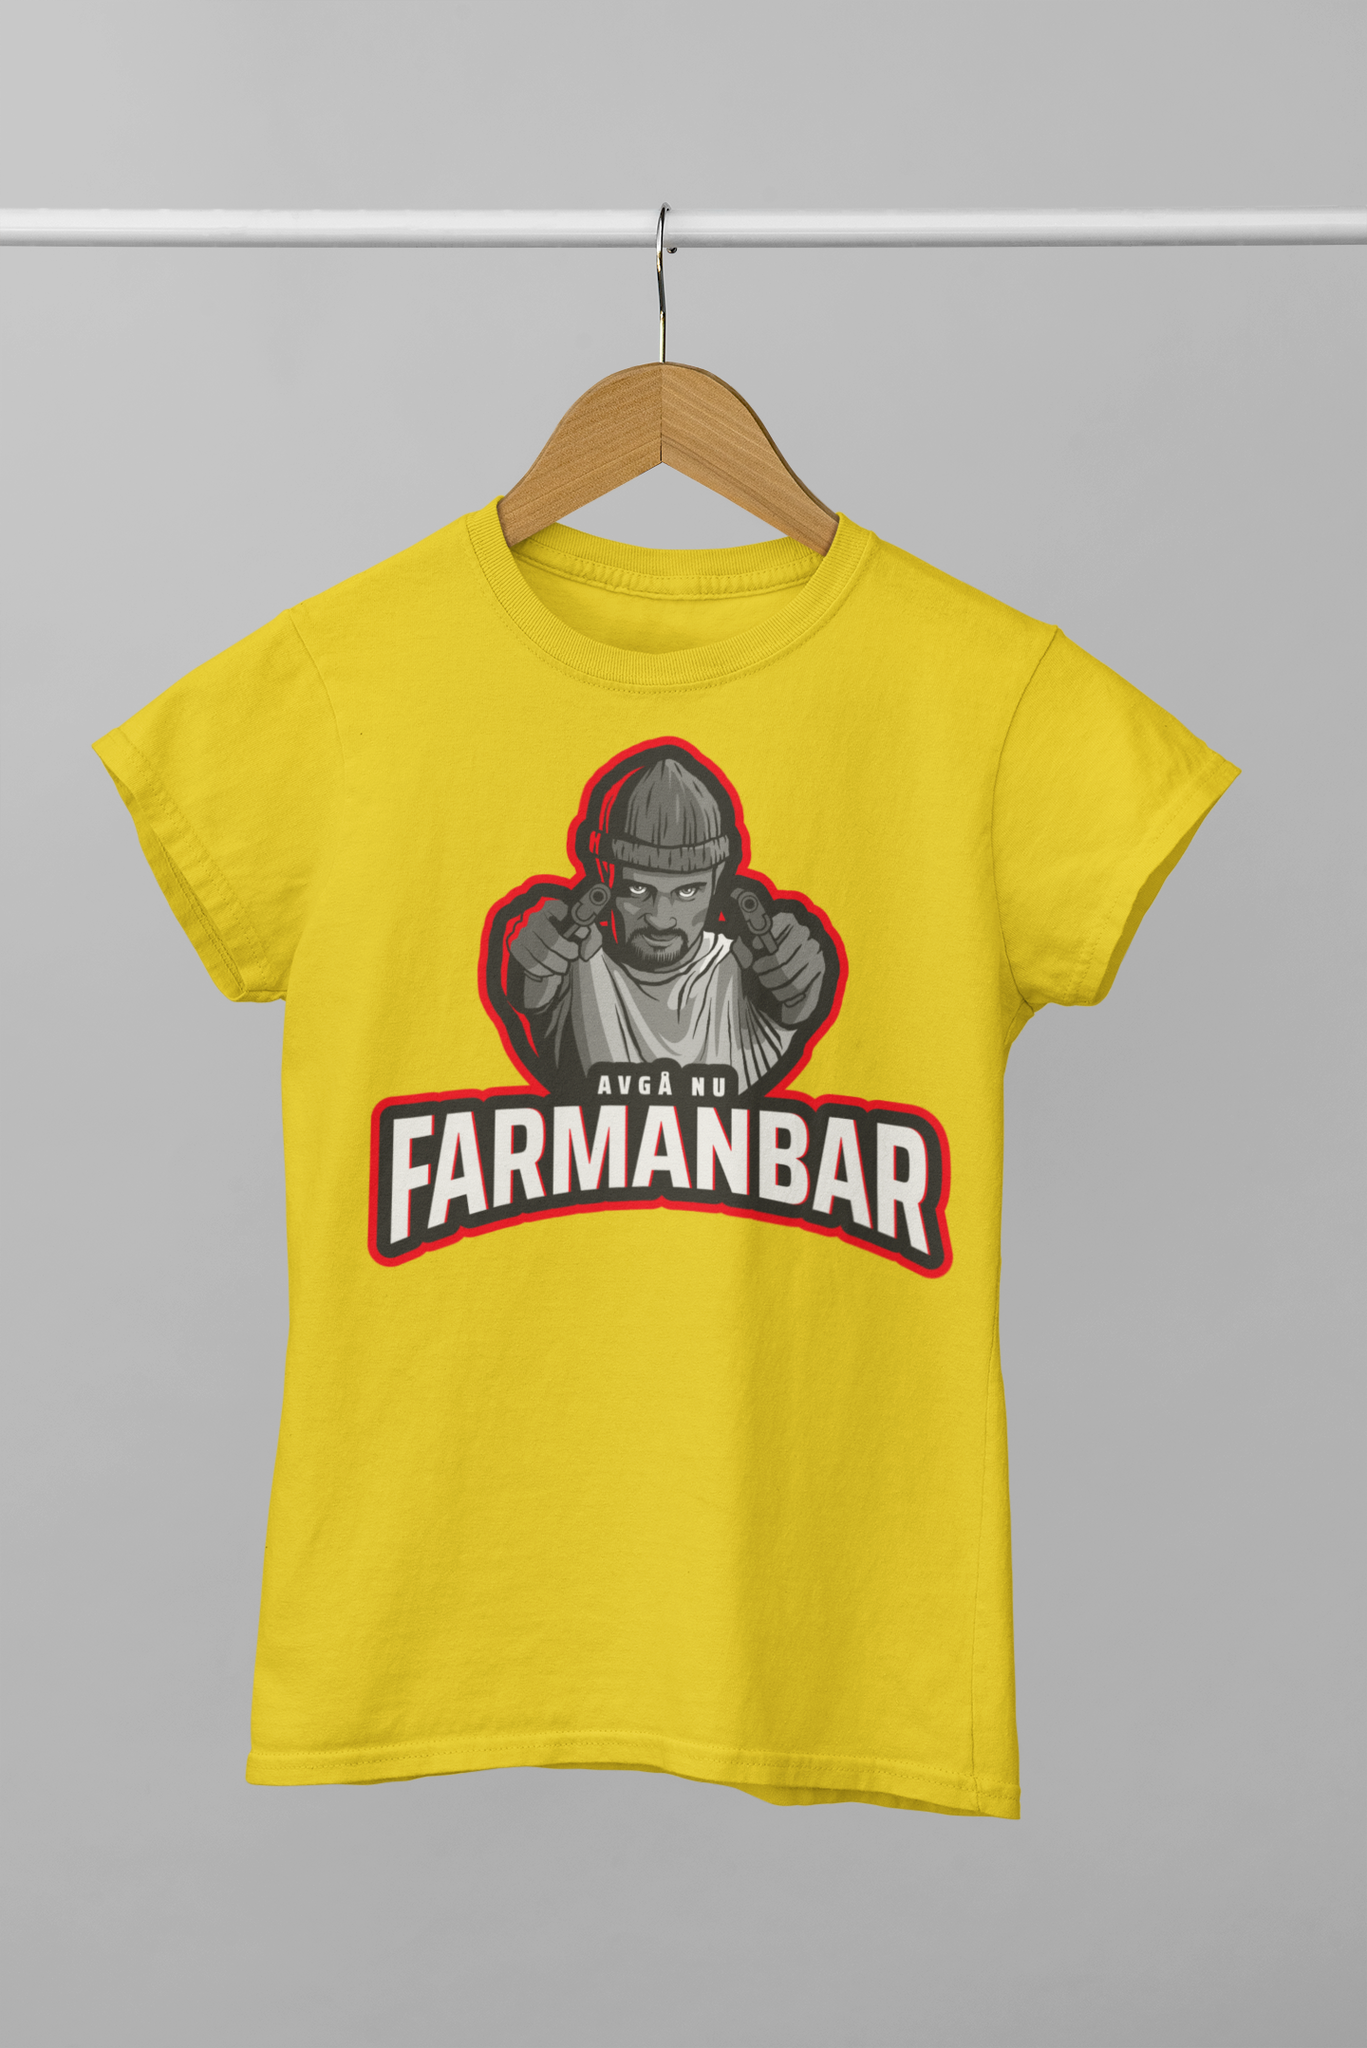 Resign Now Farmanbar (Swedish T-Shirt Men